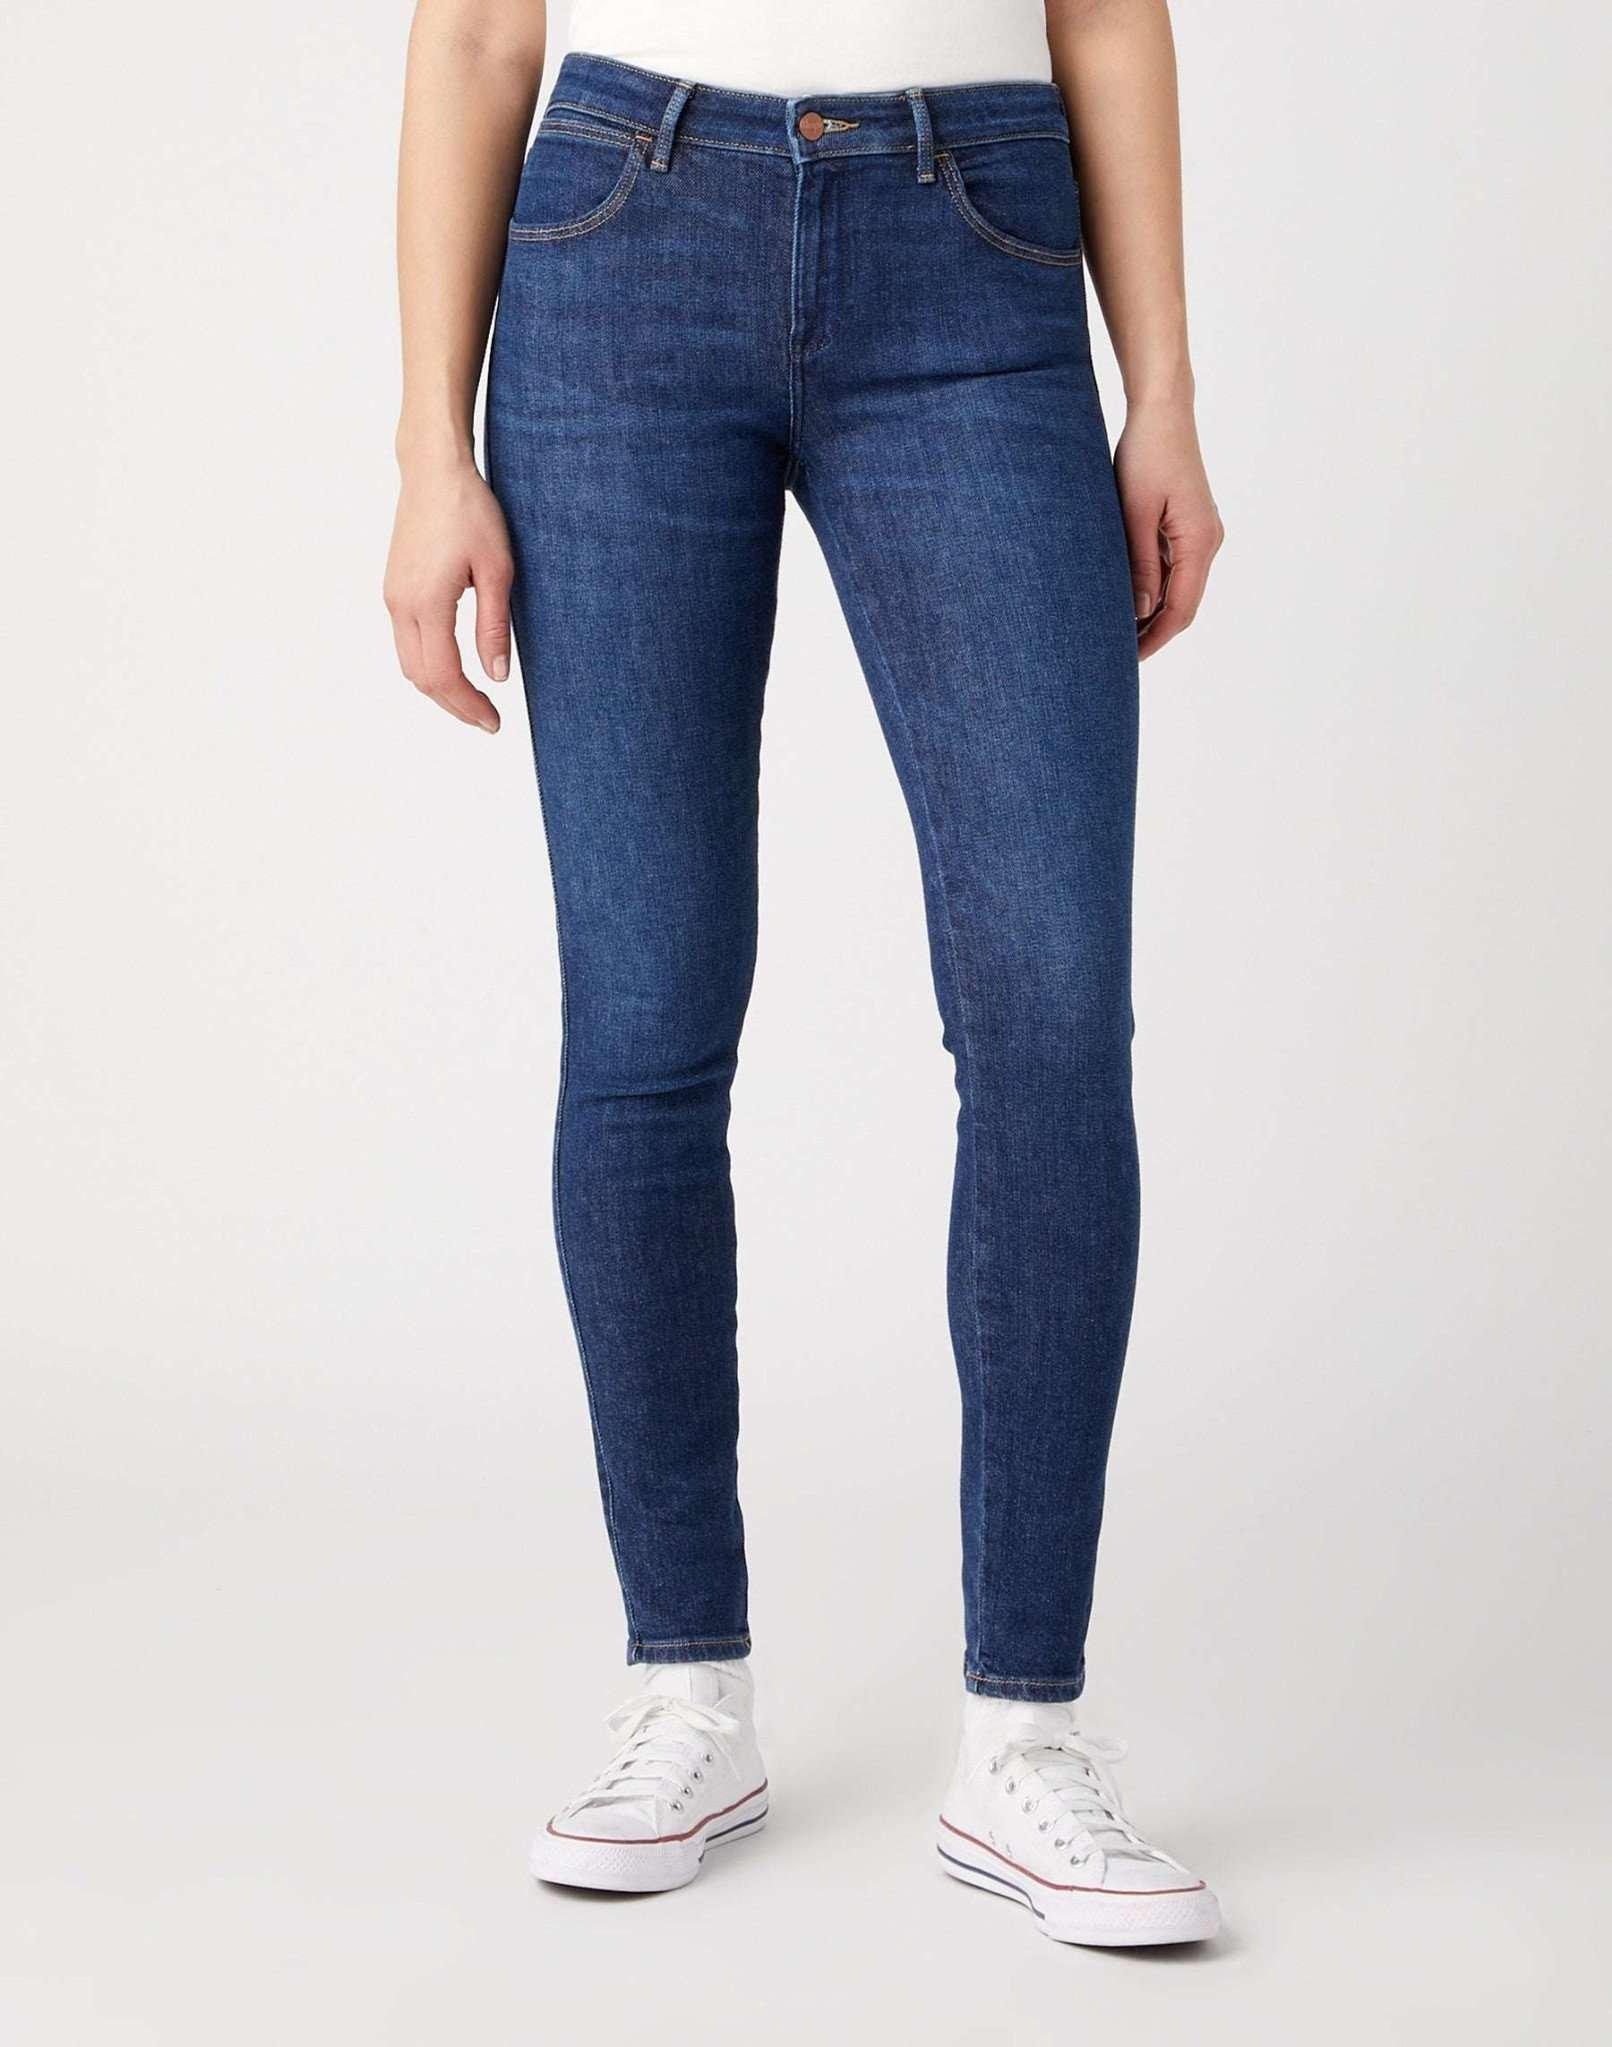 Jeans Skinny Fit Skinny Damen Blau L34/W32 von Wrangler